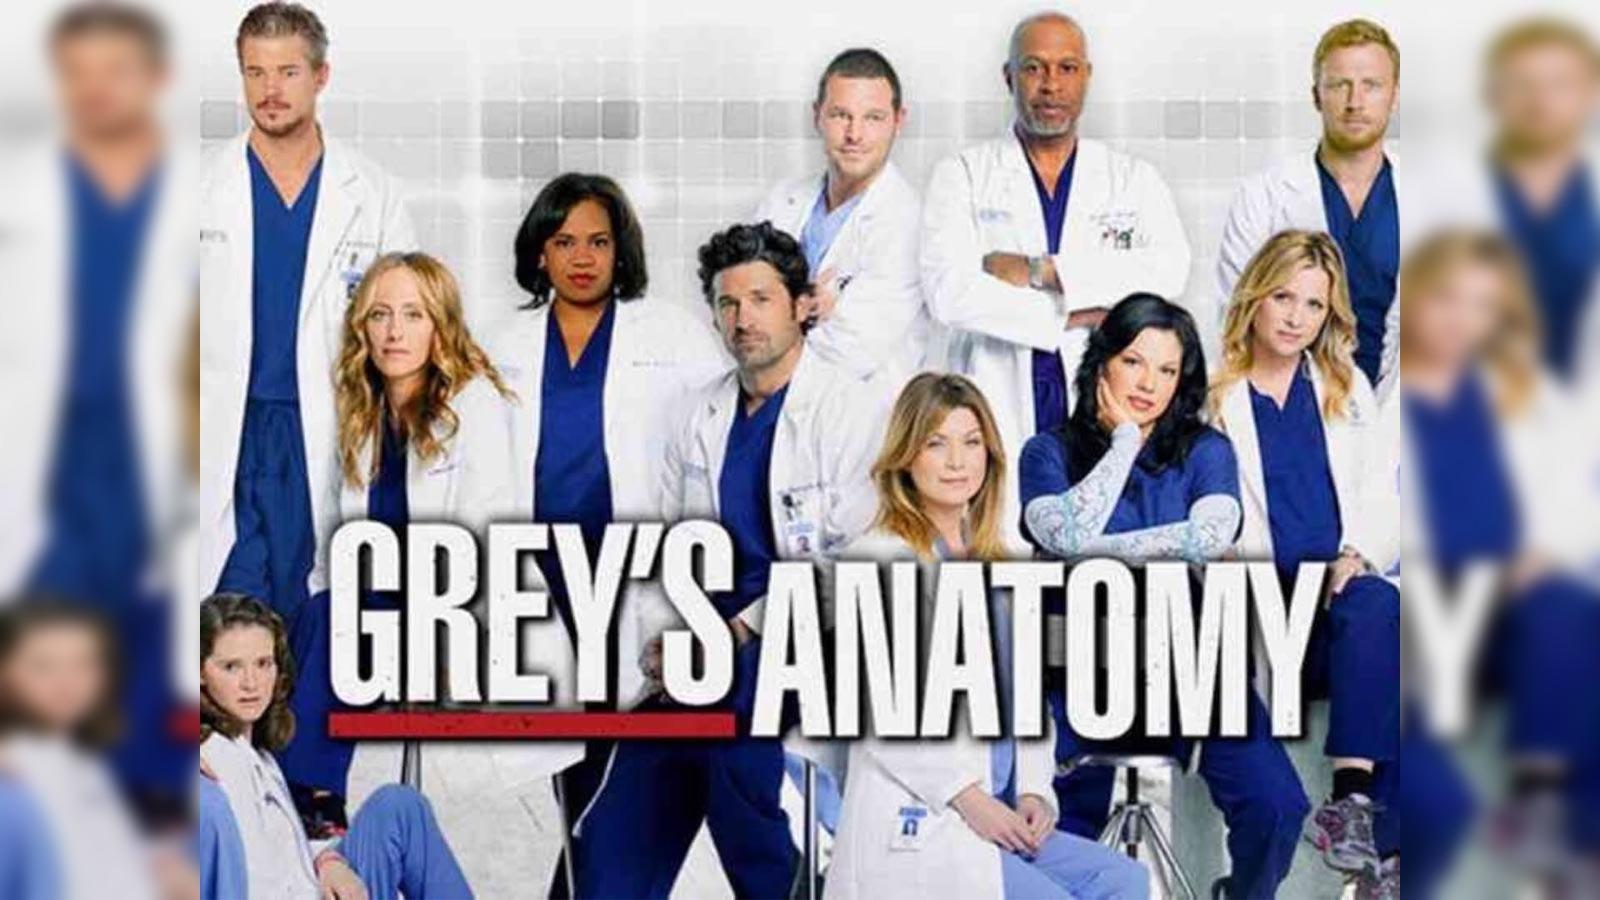 Grey's Anatomy: Long-running medical drama 'Grey's Anatomy' to